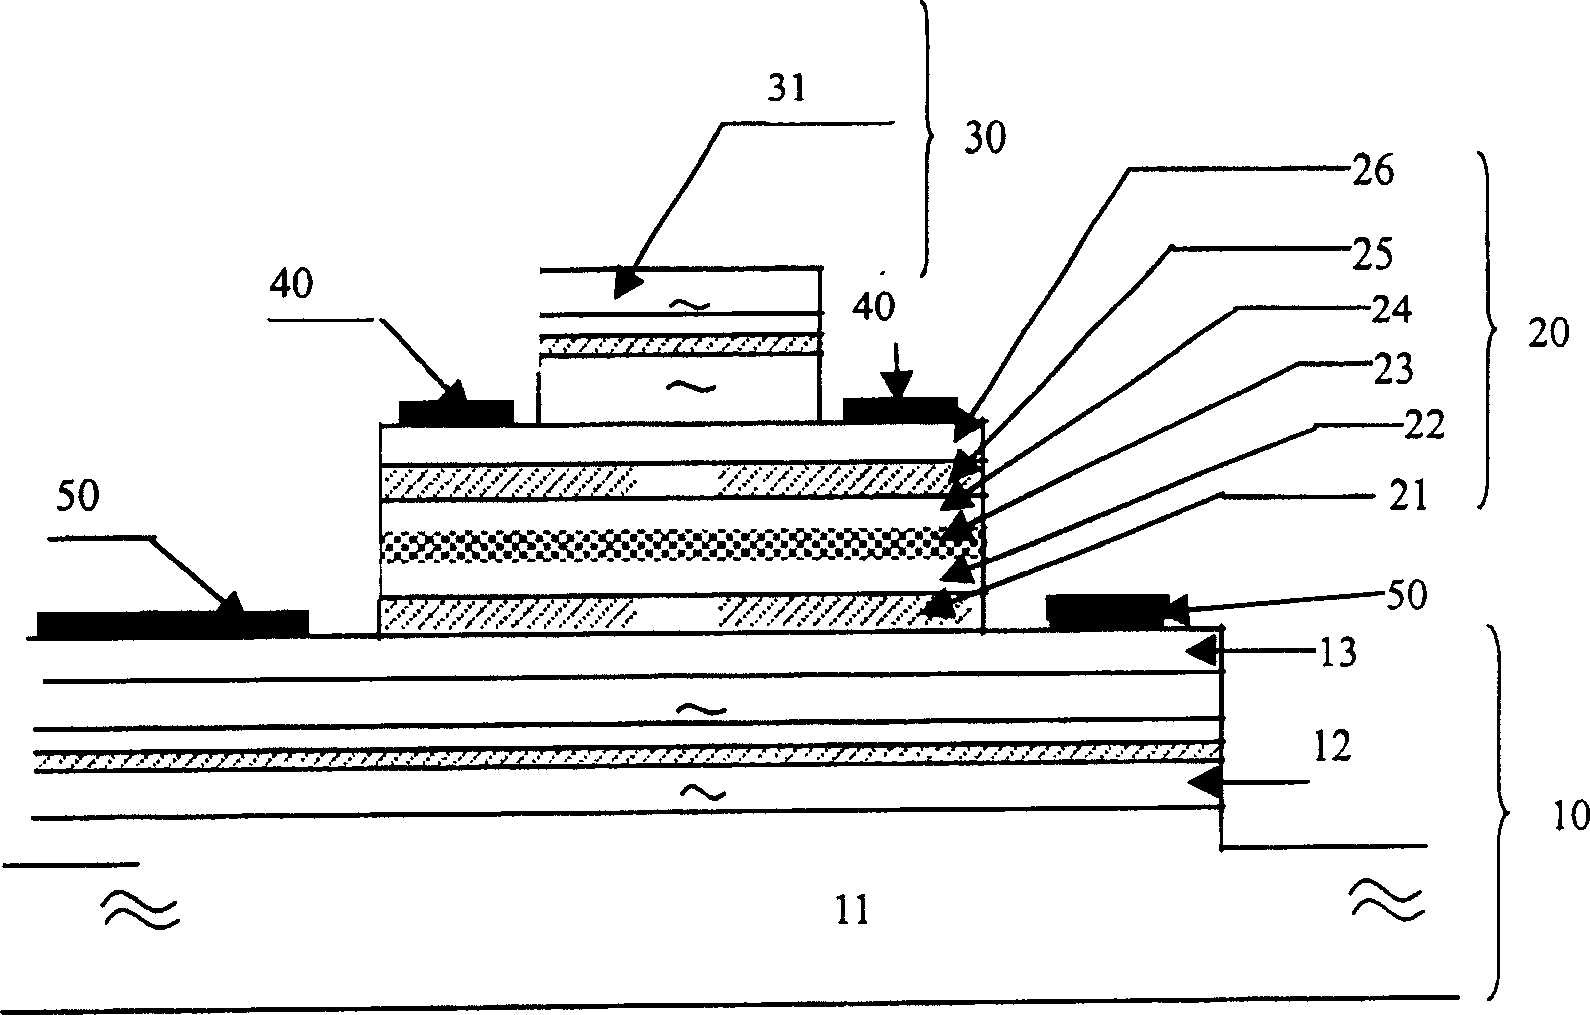 Matrix addressing vertical cavity surface emitting laser array device